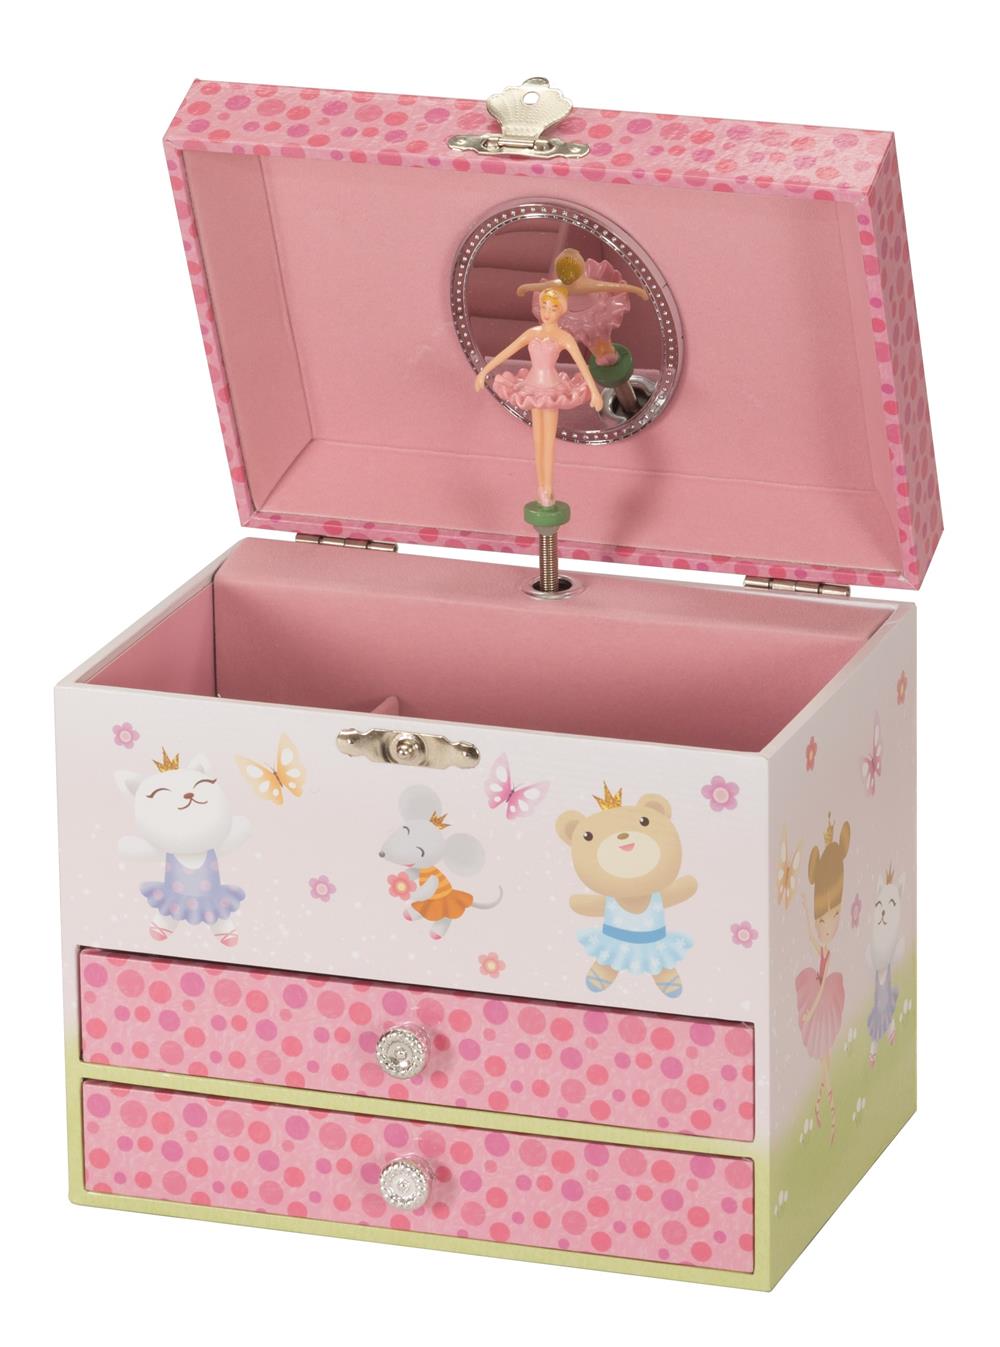 New - Rachel Dancing Princess musical jewel case 2 pack